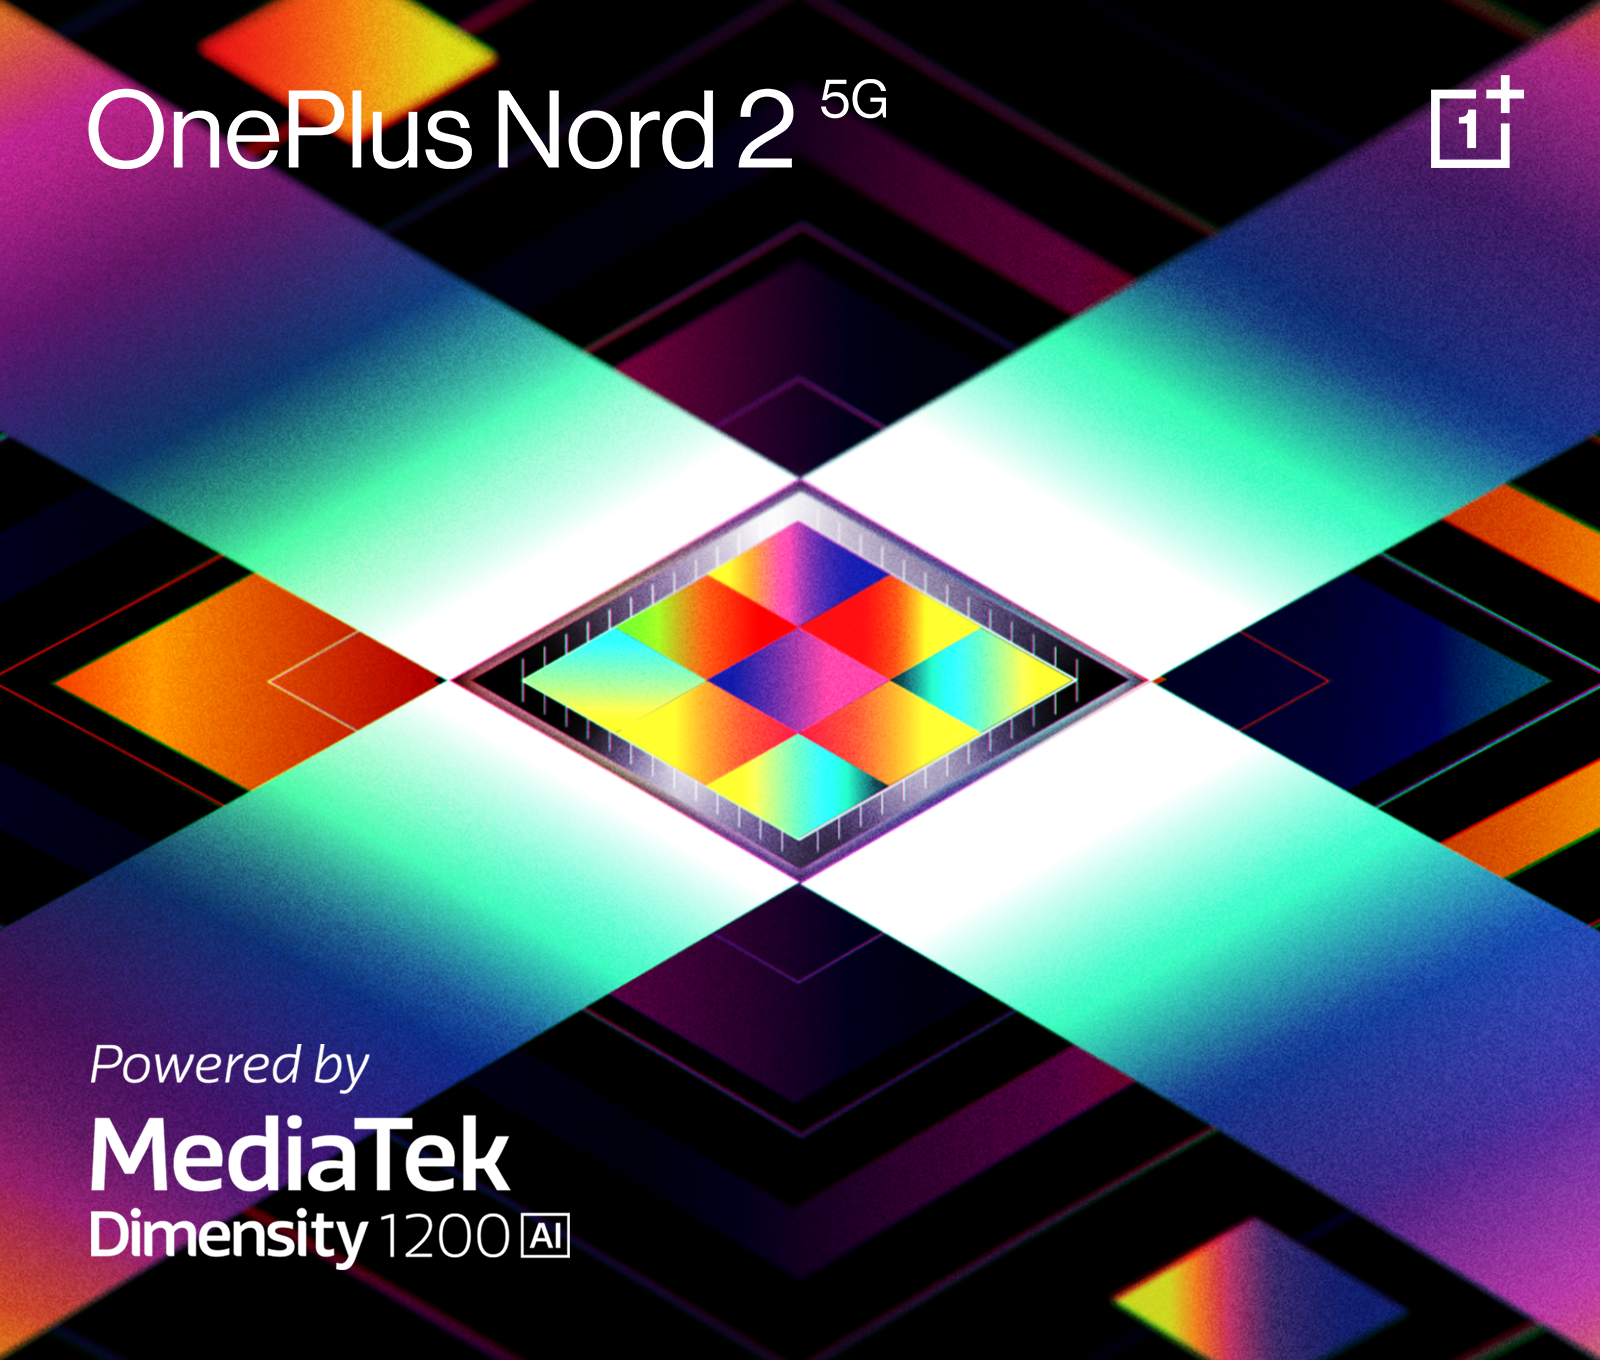 OnePlus Nord 2 5G powered by MediaTek Dimensity 1200-AI